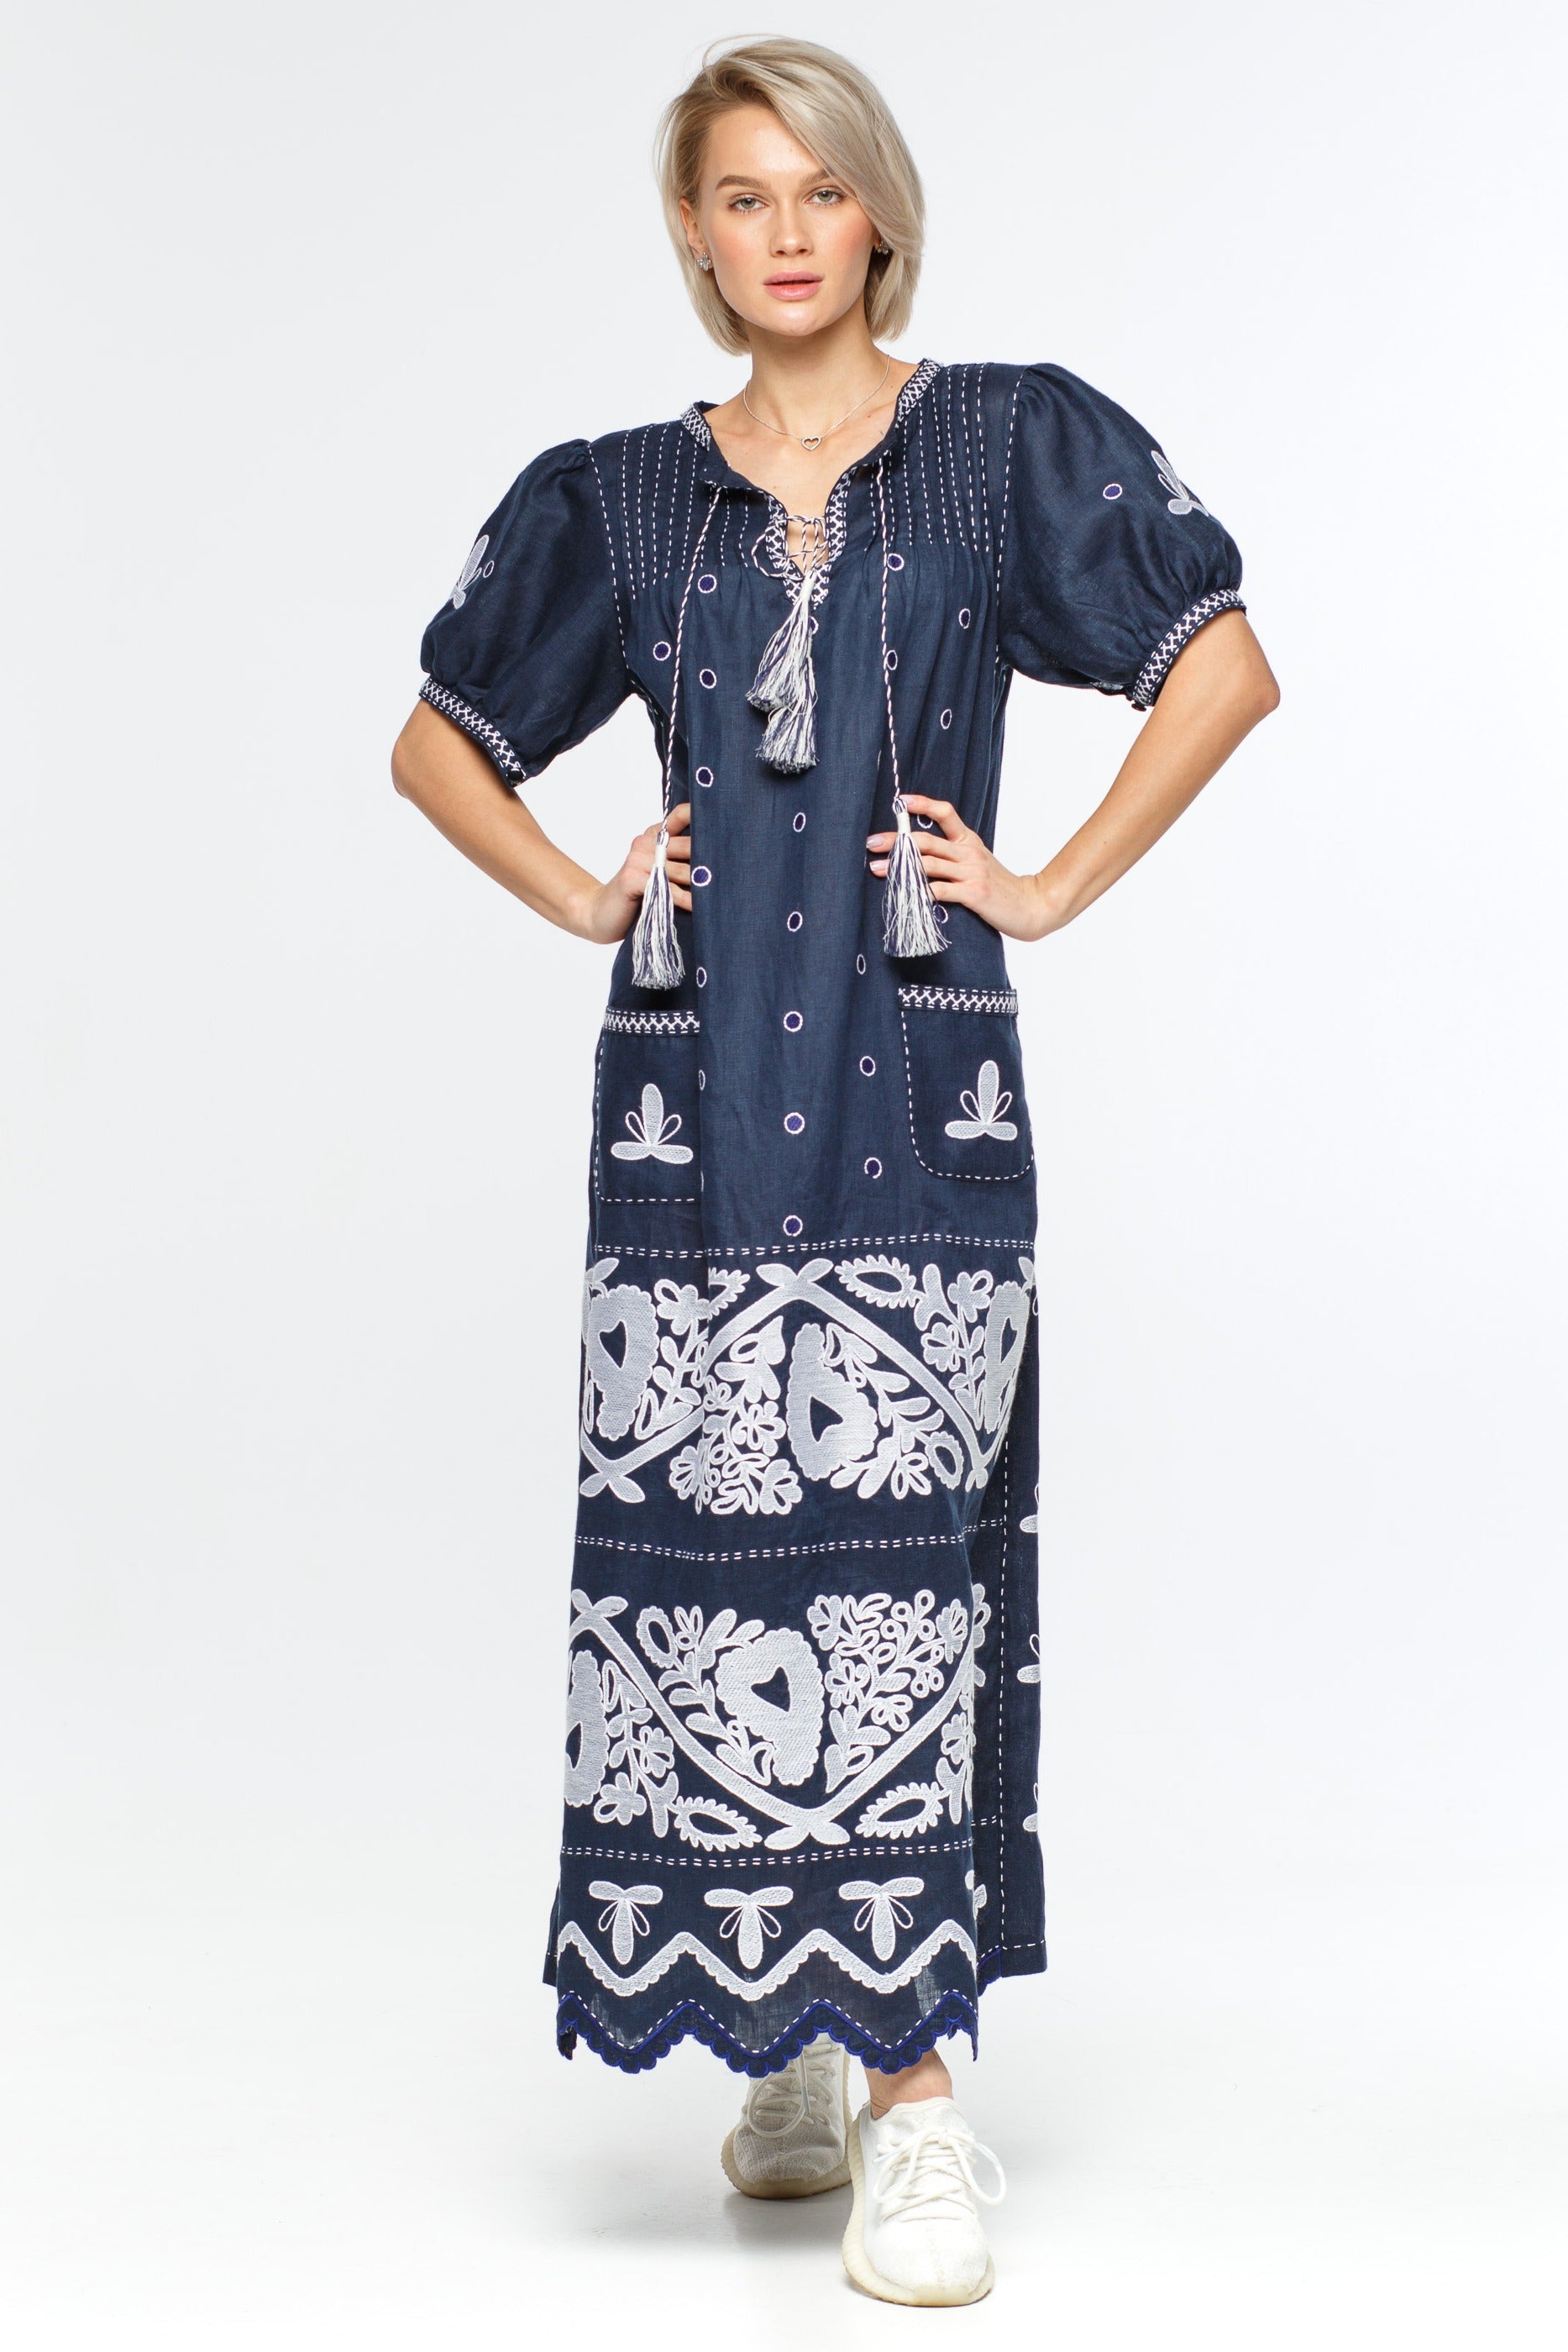 Rushka embroidered linen dress robe Fashion bohemian clothing